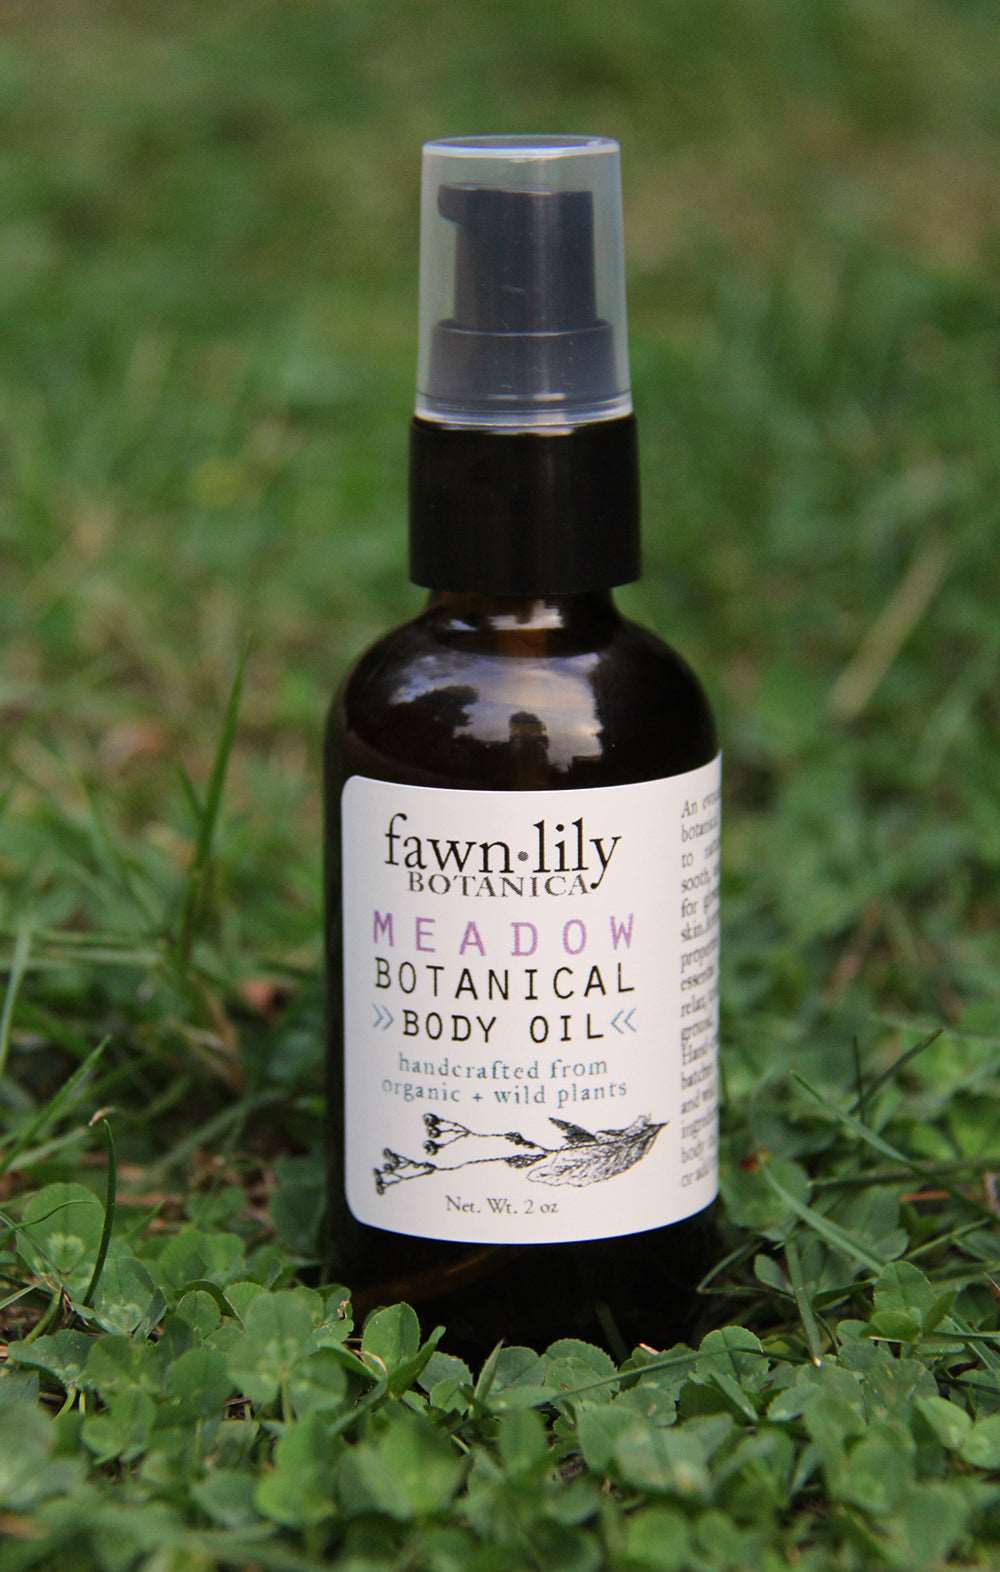 MEADOW BOTANICAL BODY OIL. Natural vegan body and massage oil to moisturize skin, organic vegan ingredients.